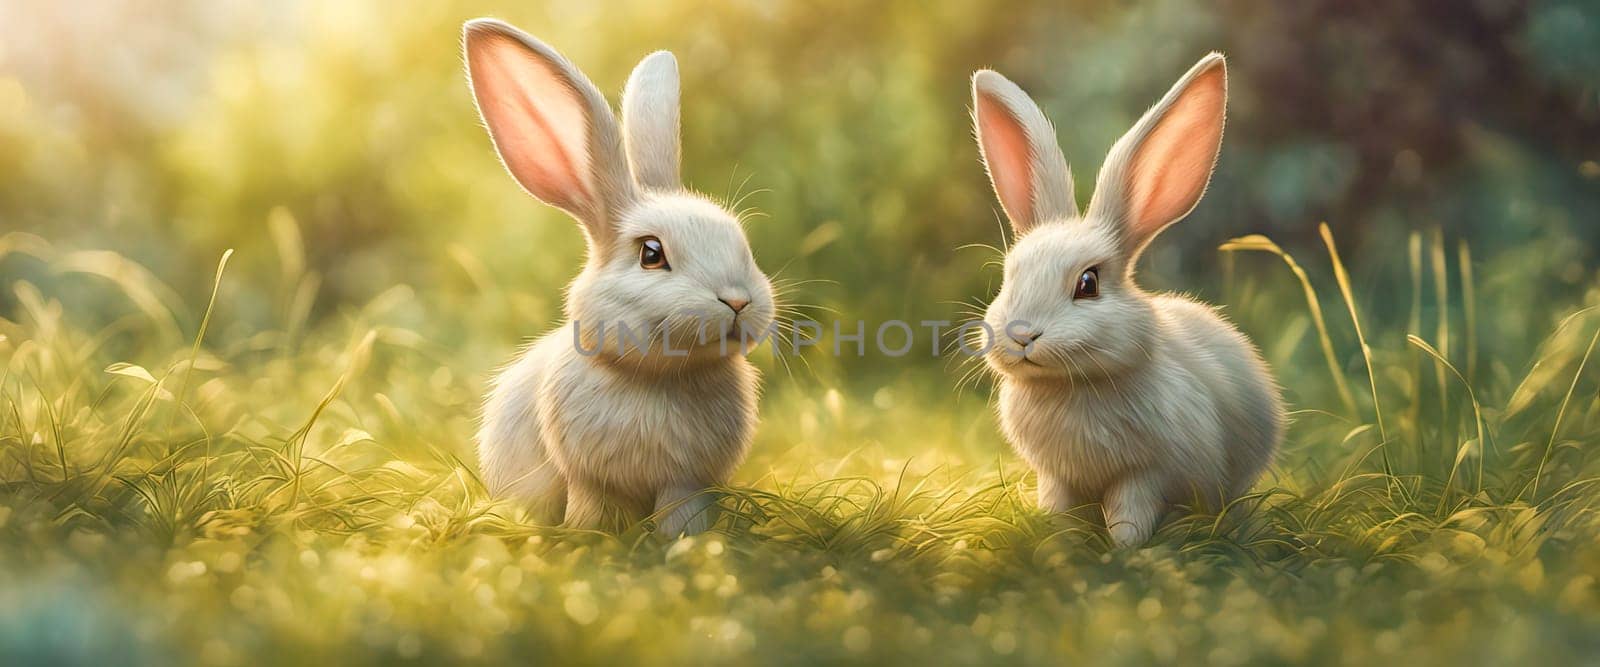 Cute baby rabbit on a green lawn sunshine by EkaterinaPereslavtseva